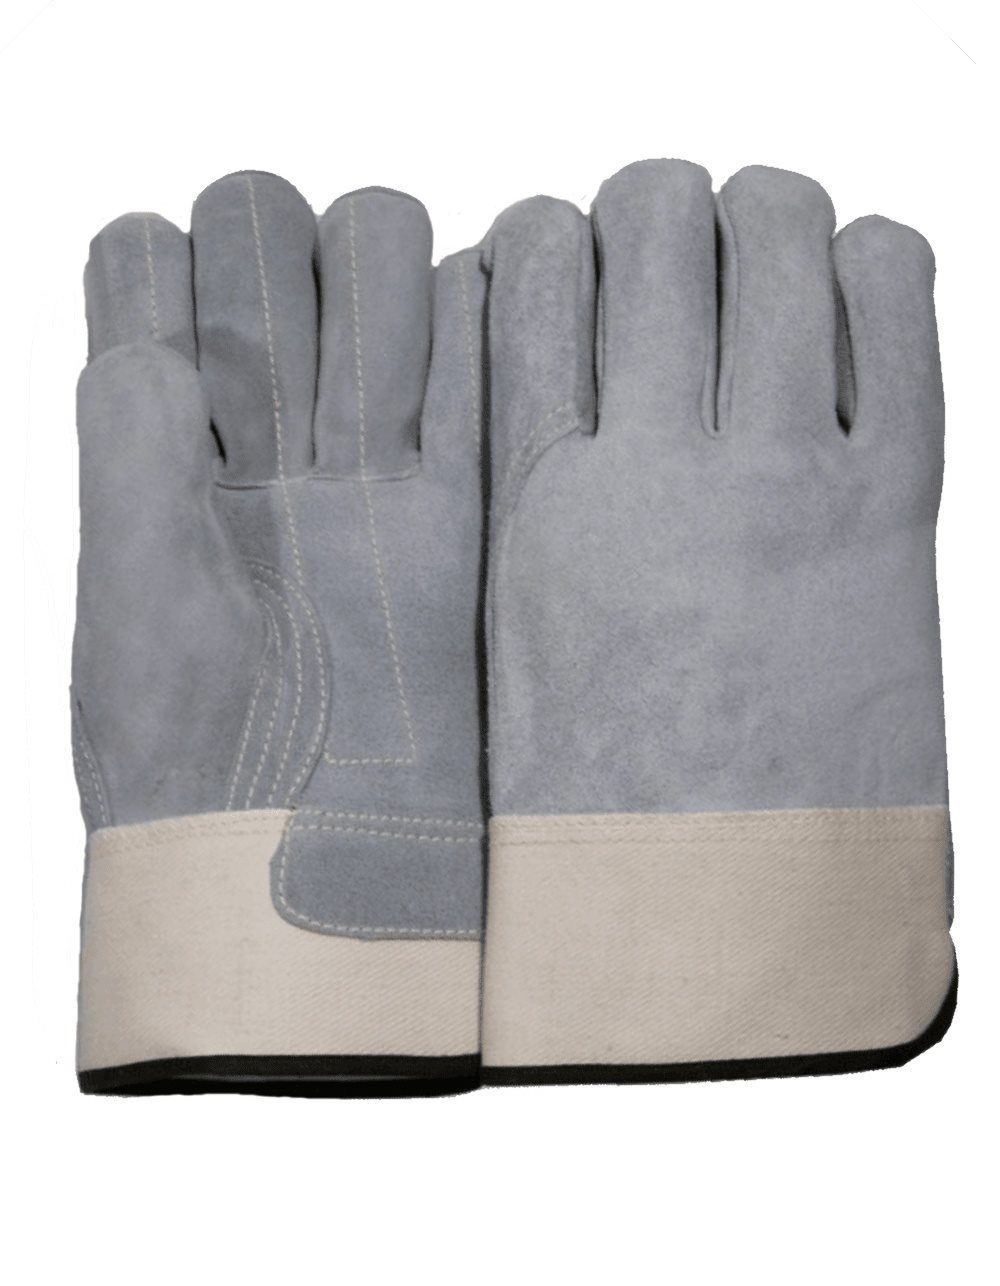 Leather Work Gloves, Premium Cowhide, Men's Medium